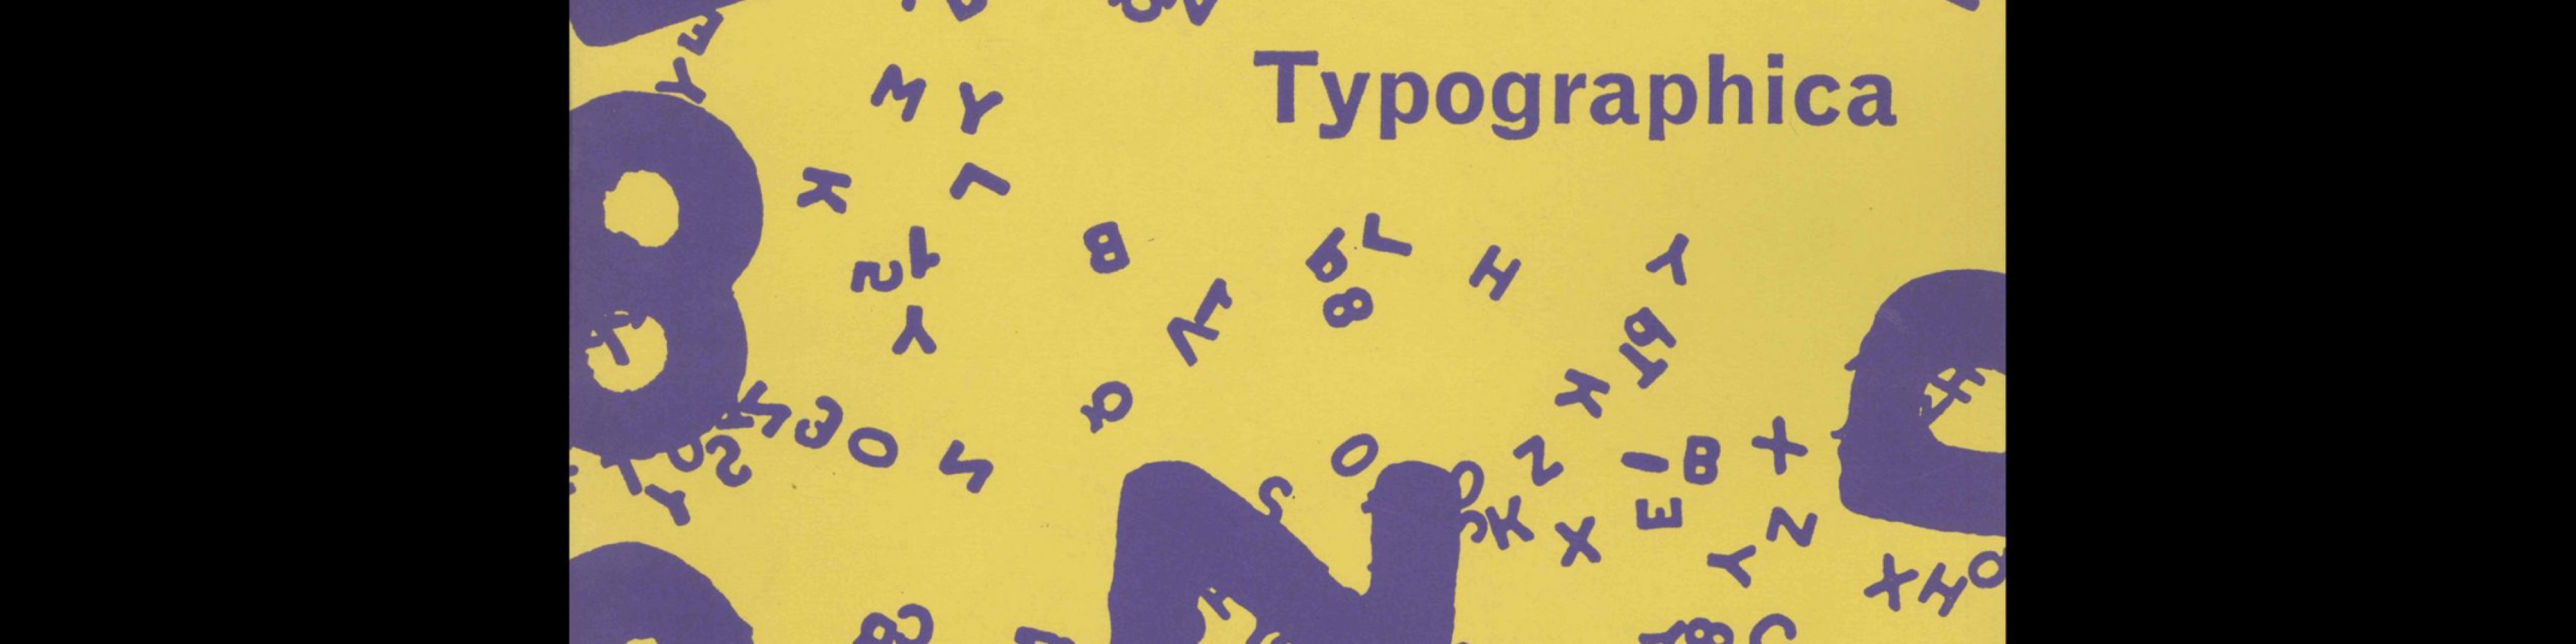 Typographica, New Series 1, 1960. Designed by Herbert Spencer